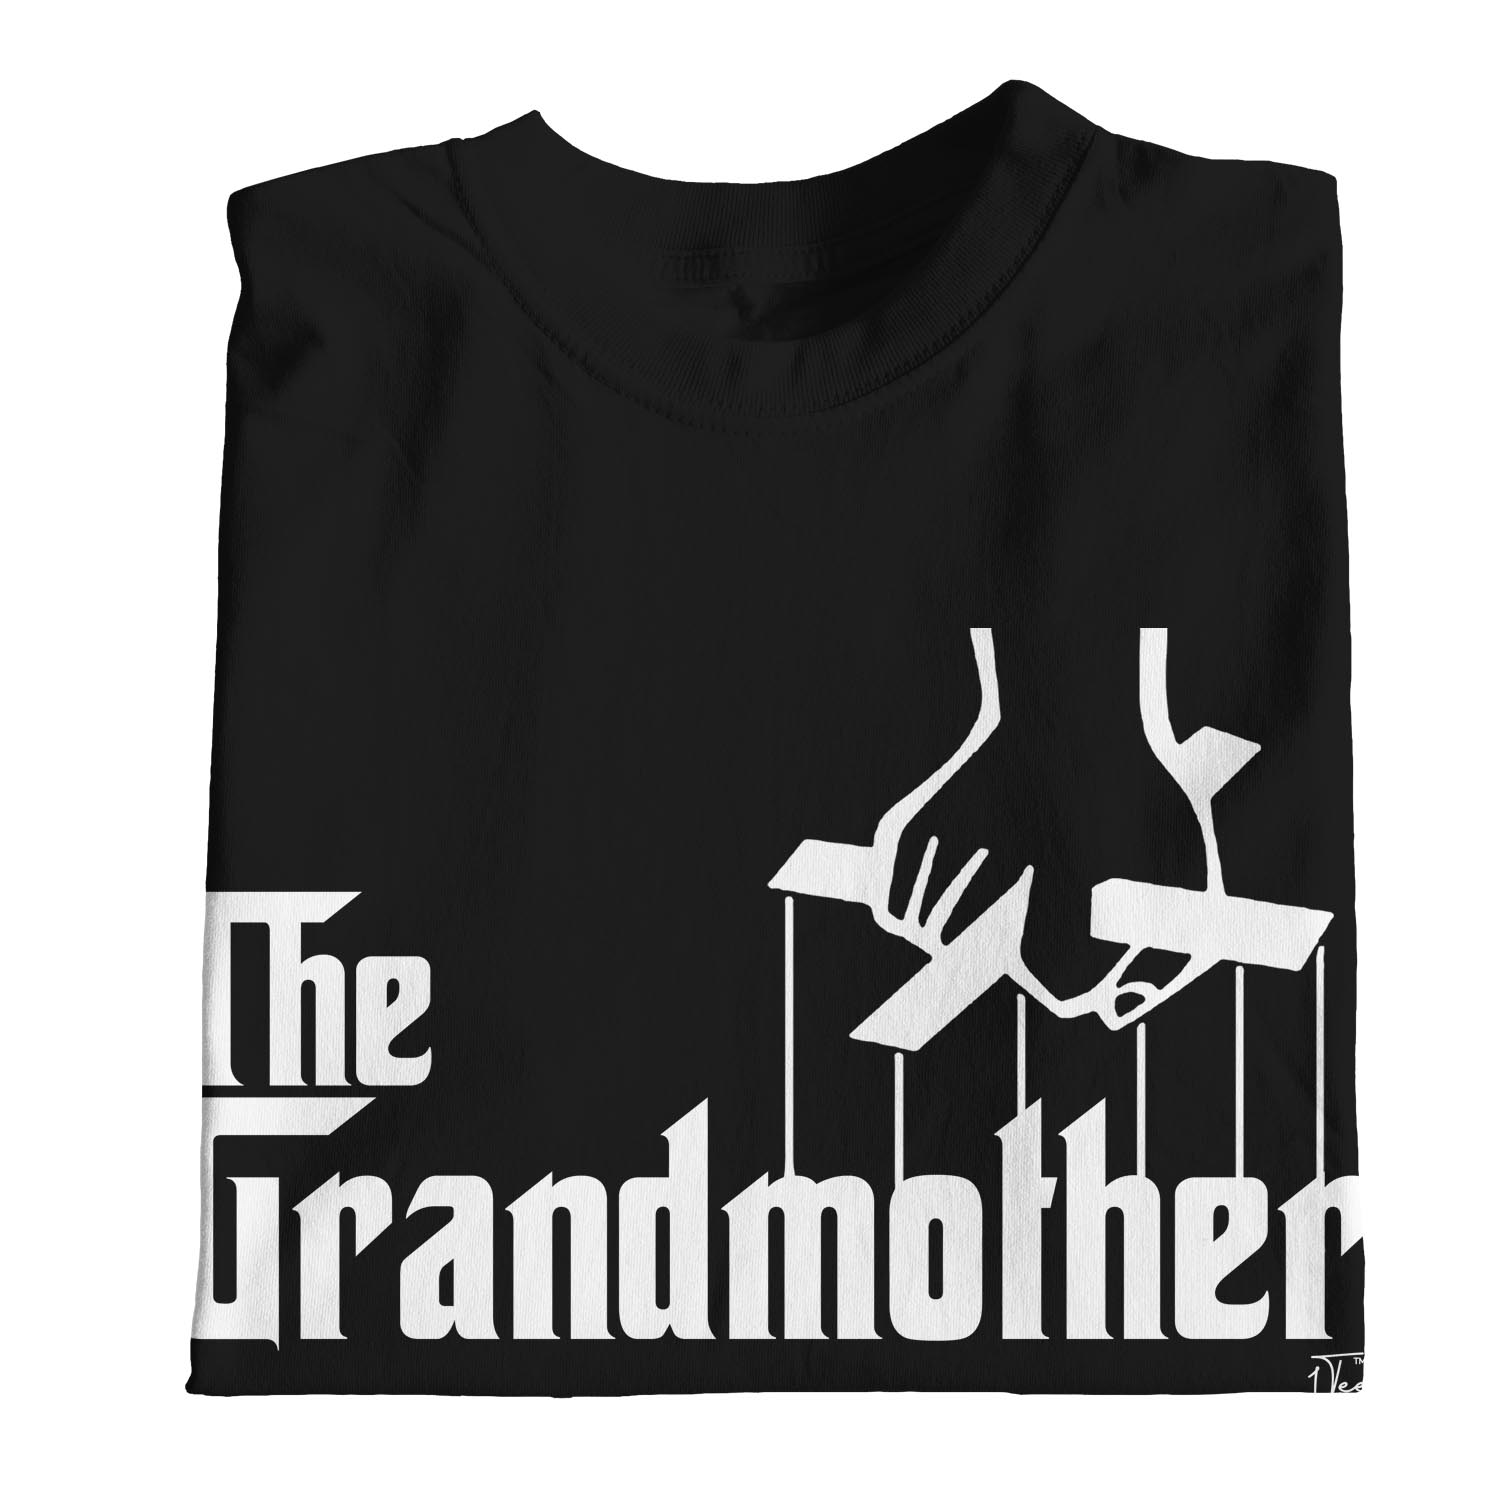 1Tee Womens The Grandmother T-Shirt 